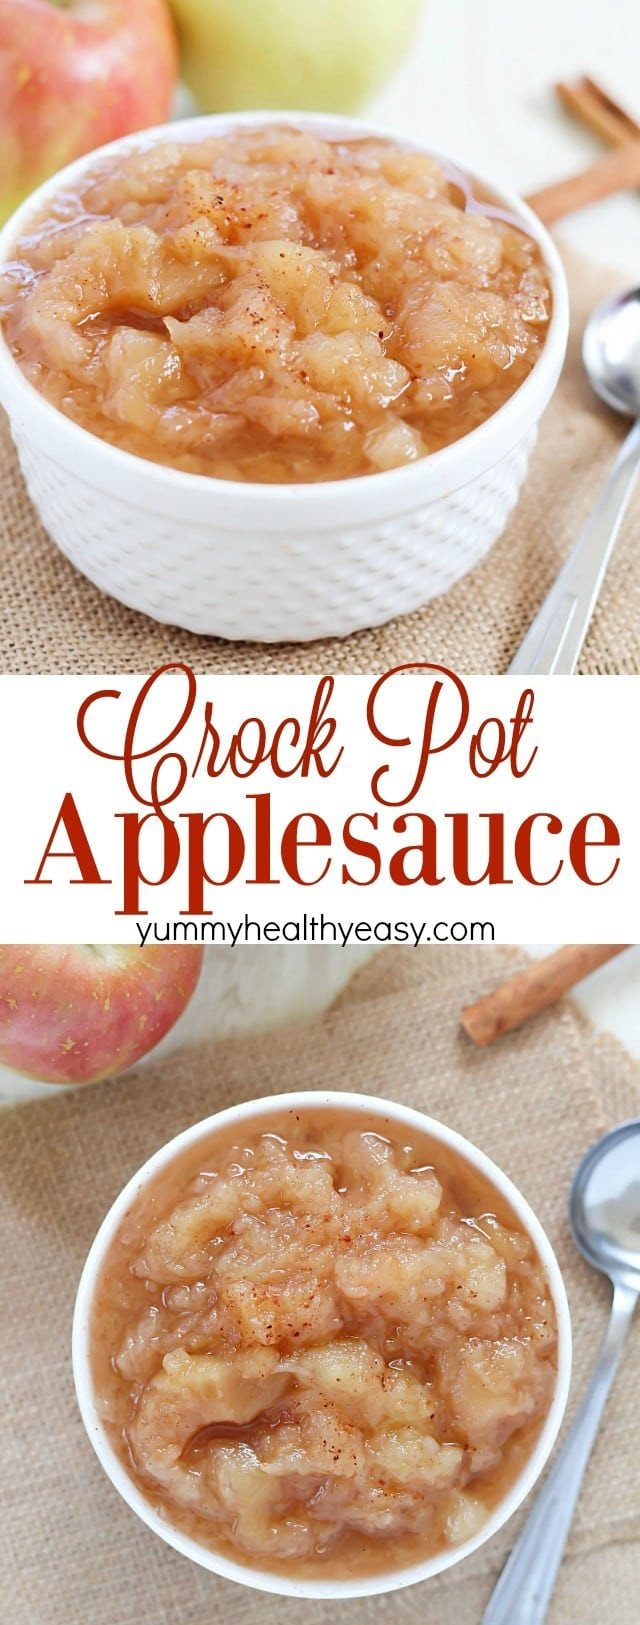 Healthy Recipes Using Applesauce
 Homemade Crock Pot Applesauce Yummy Healthy Easy